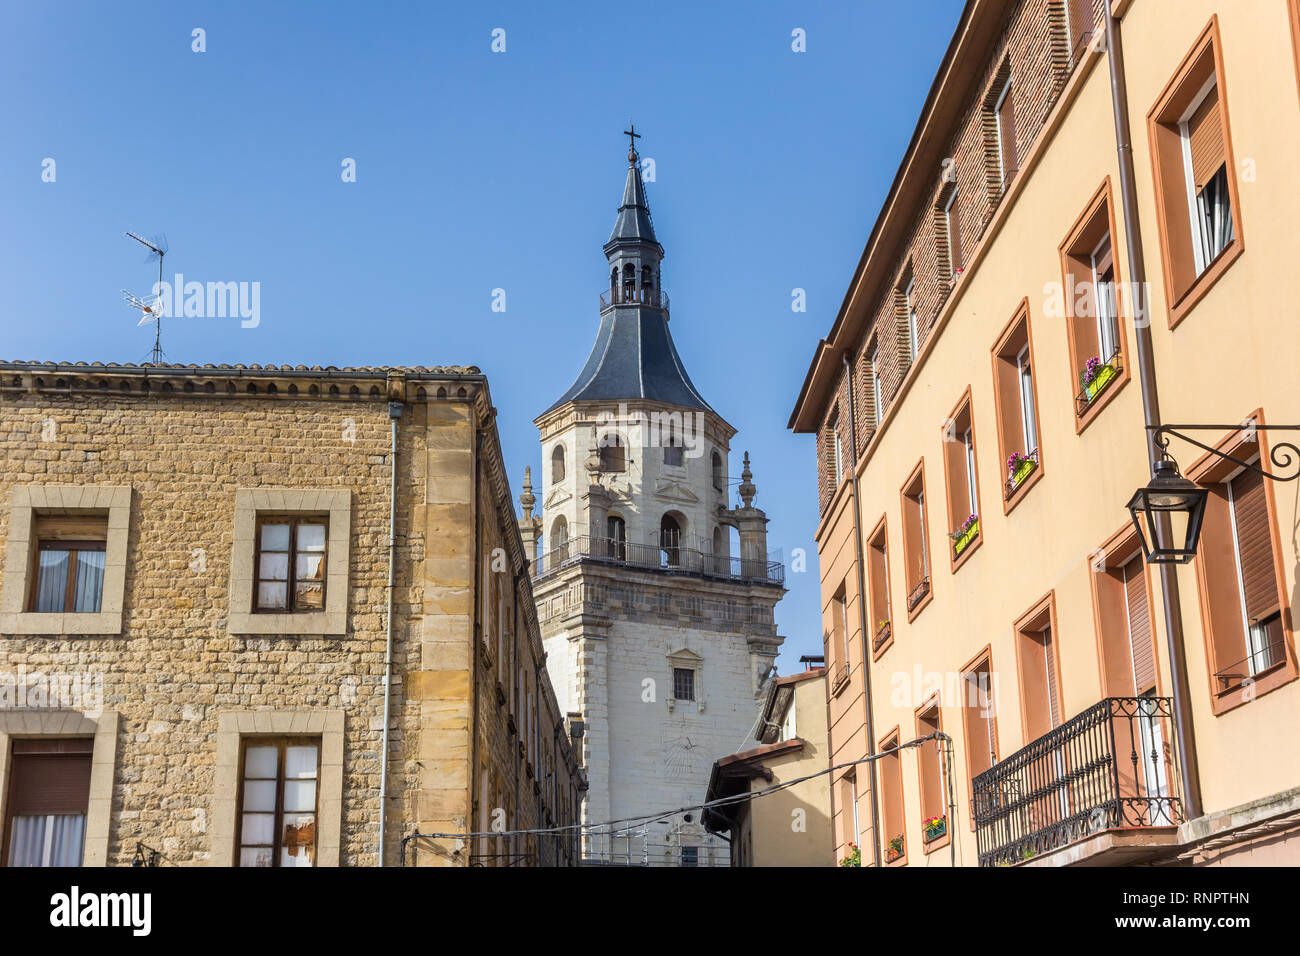 Tower of the Santa Maria cathedral of Vitoria-Gasteiz, Spain Stock Photo